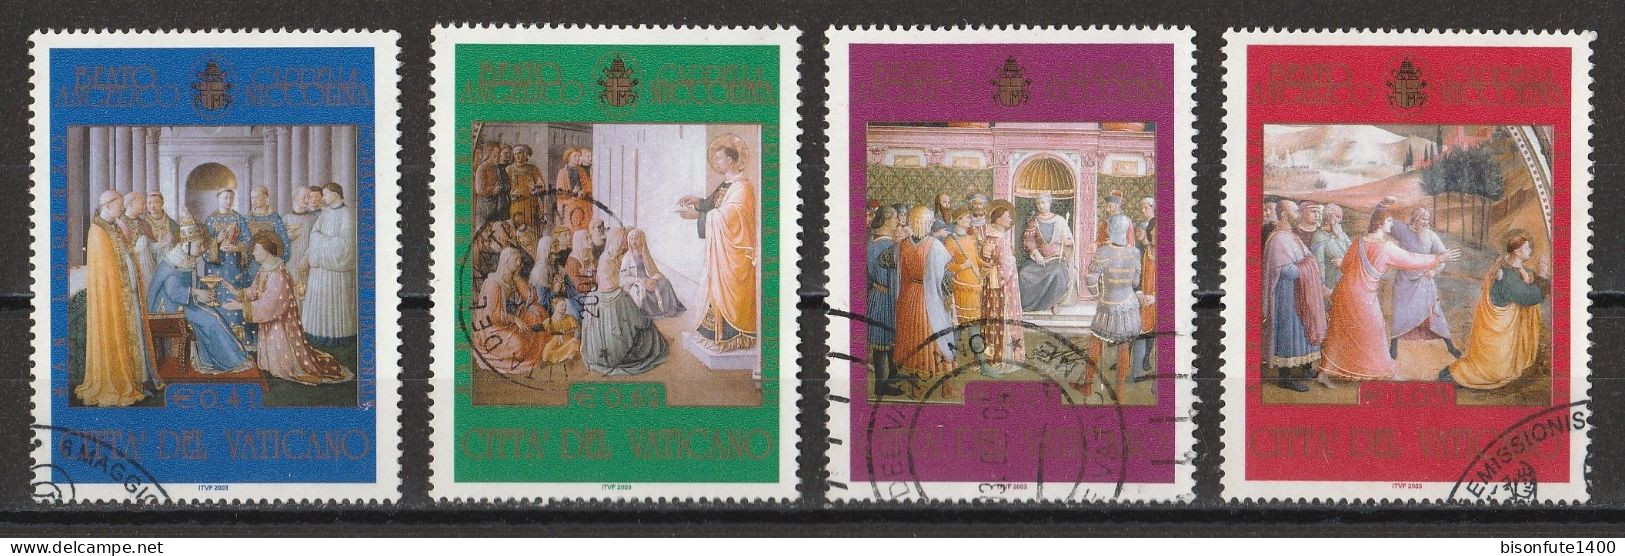 Vatican 2003 : Timbres Yvert & Tellier N° 1309 - 1310 - 1311 Et 1312 Oblitérés. - Usati